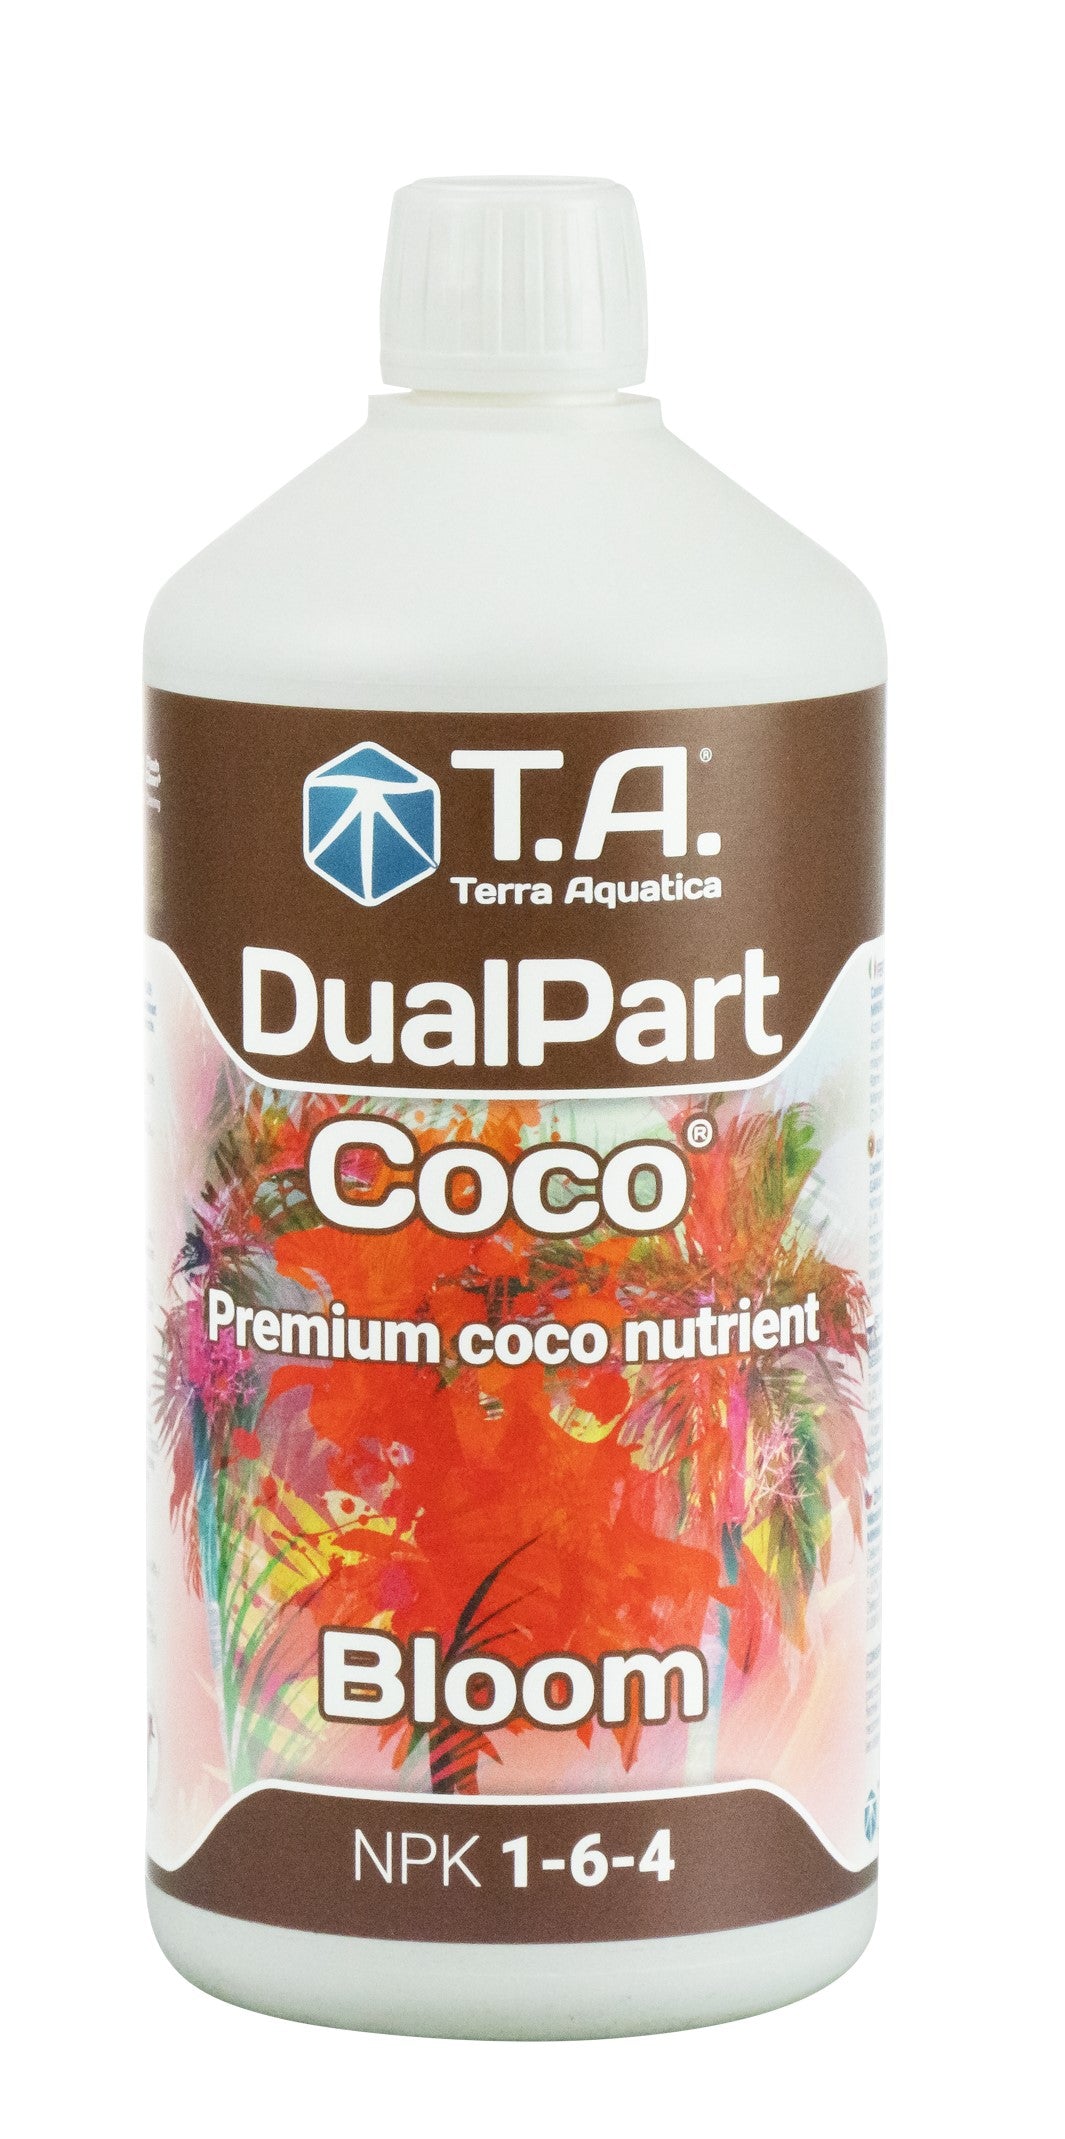 DualPart Coco Bloom